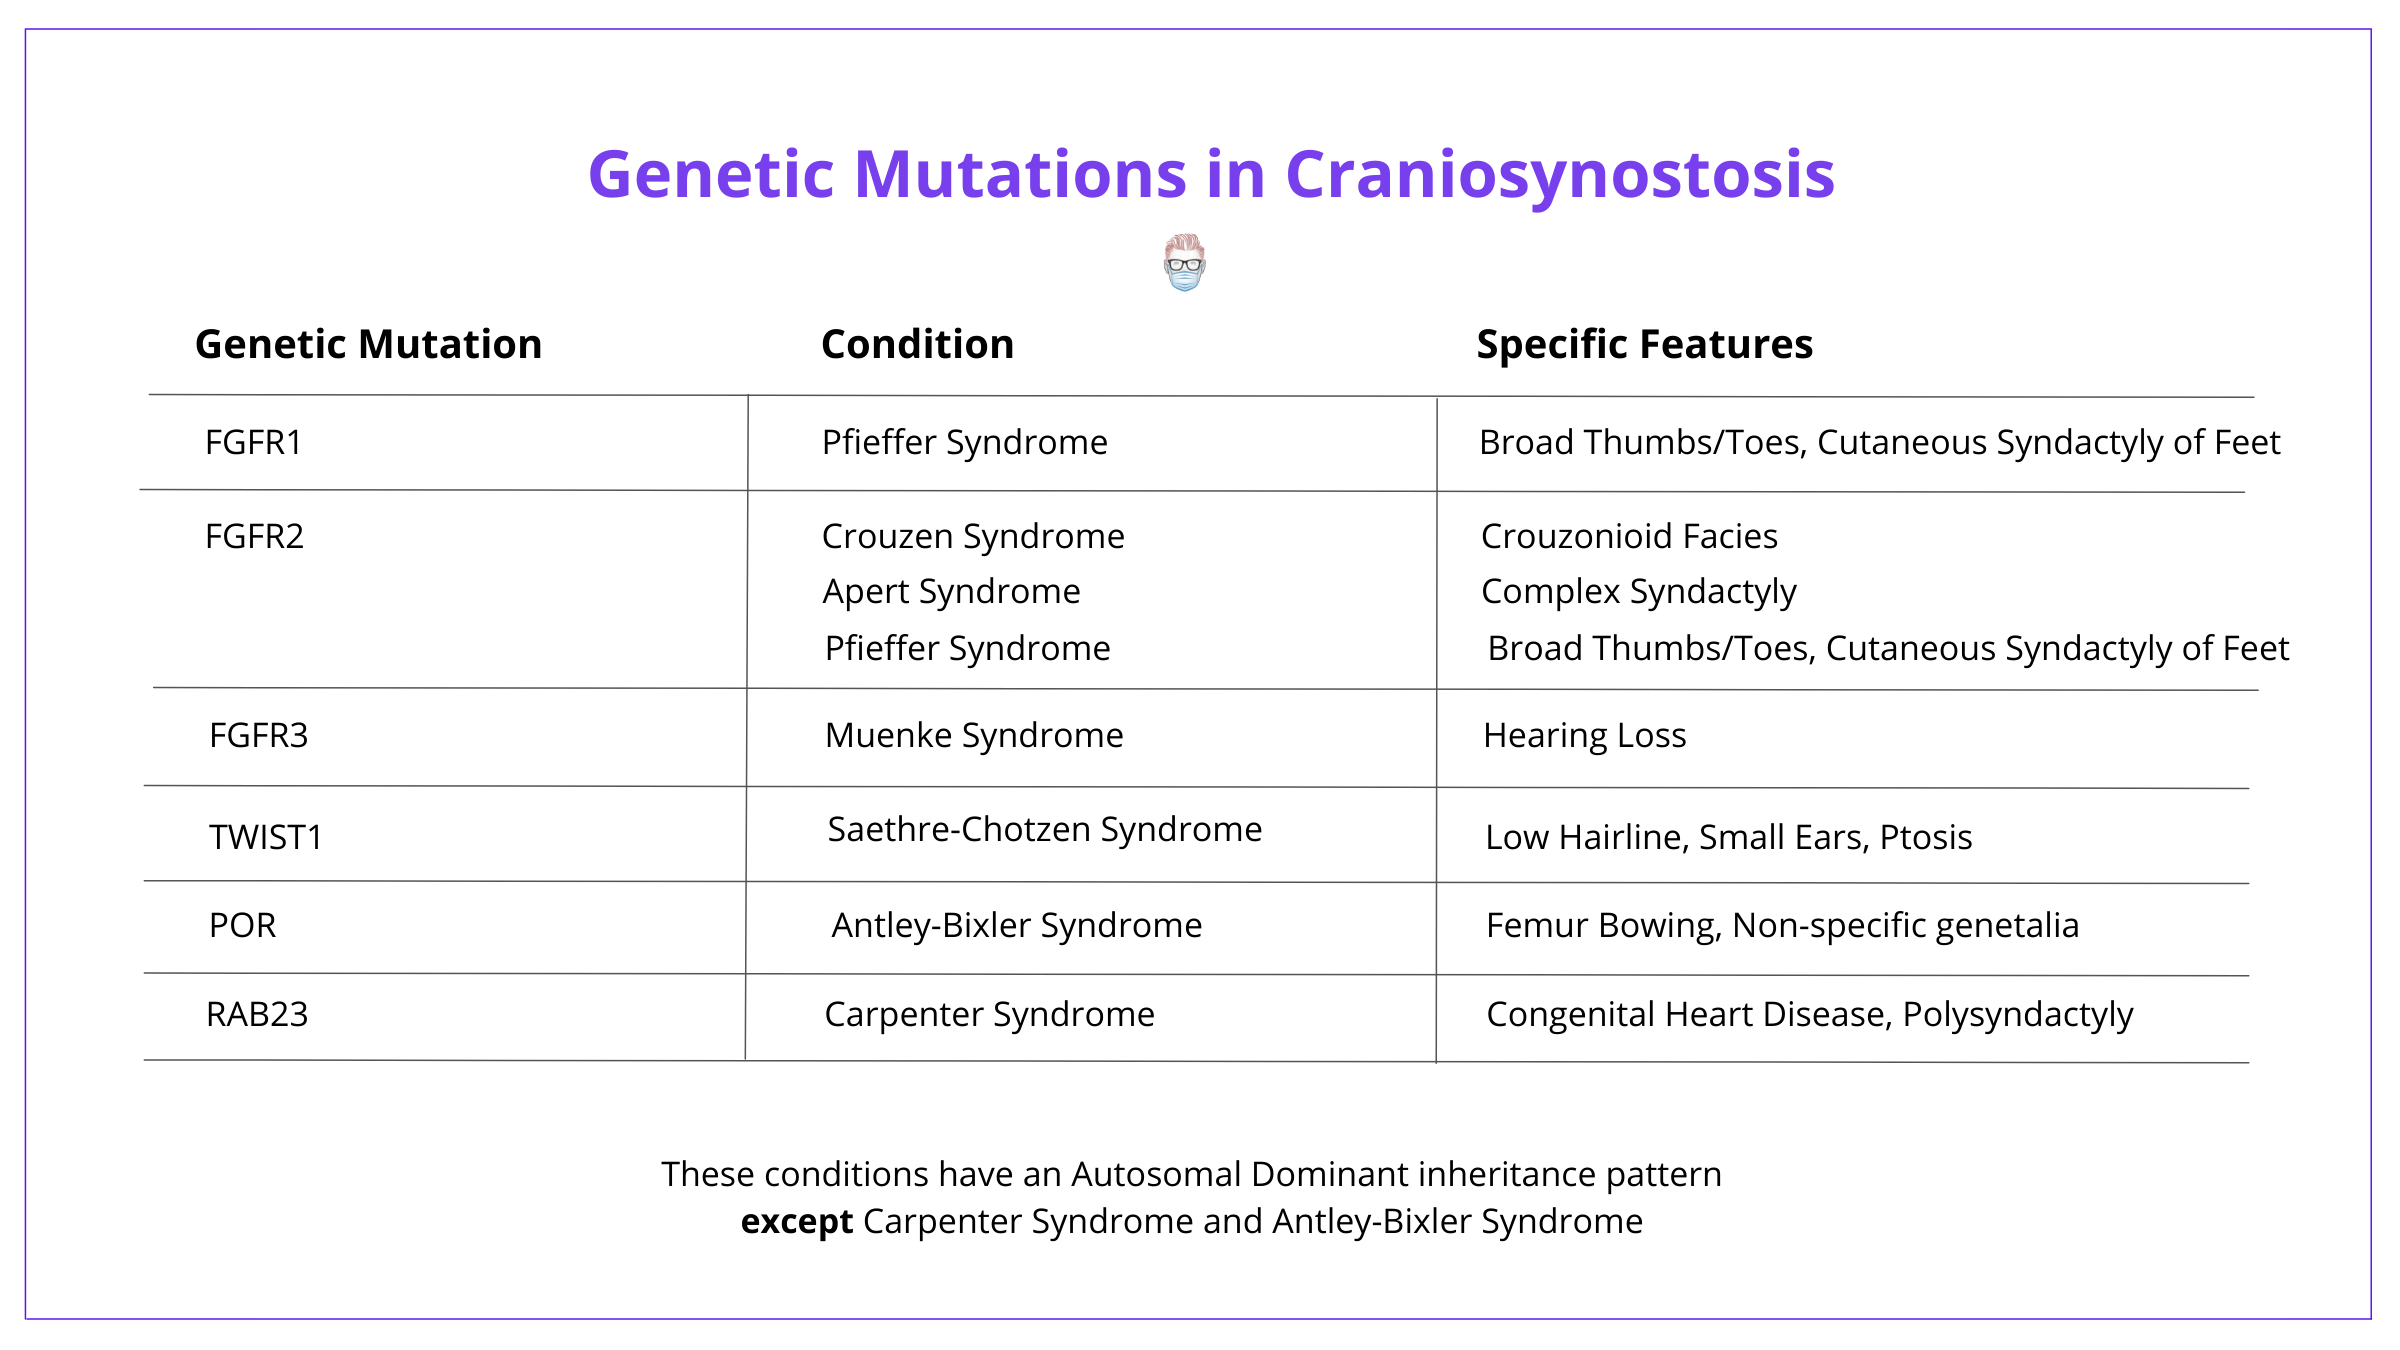 Genetic Mutations in Craniosynostosis, FGFR1, FGFR2, FGFR3, TWIST1, POR, RAB23, mutations, genetic, craniosynostosis, syndrome, Pfieffer, Crouzen, Apery, Muenke, Saethre-Chotzen, Antley-Bixlery, Carpenter, clinical features